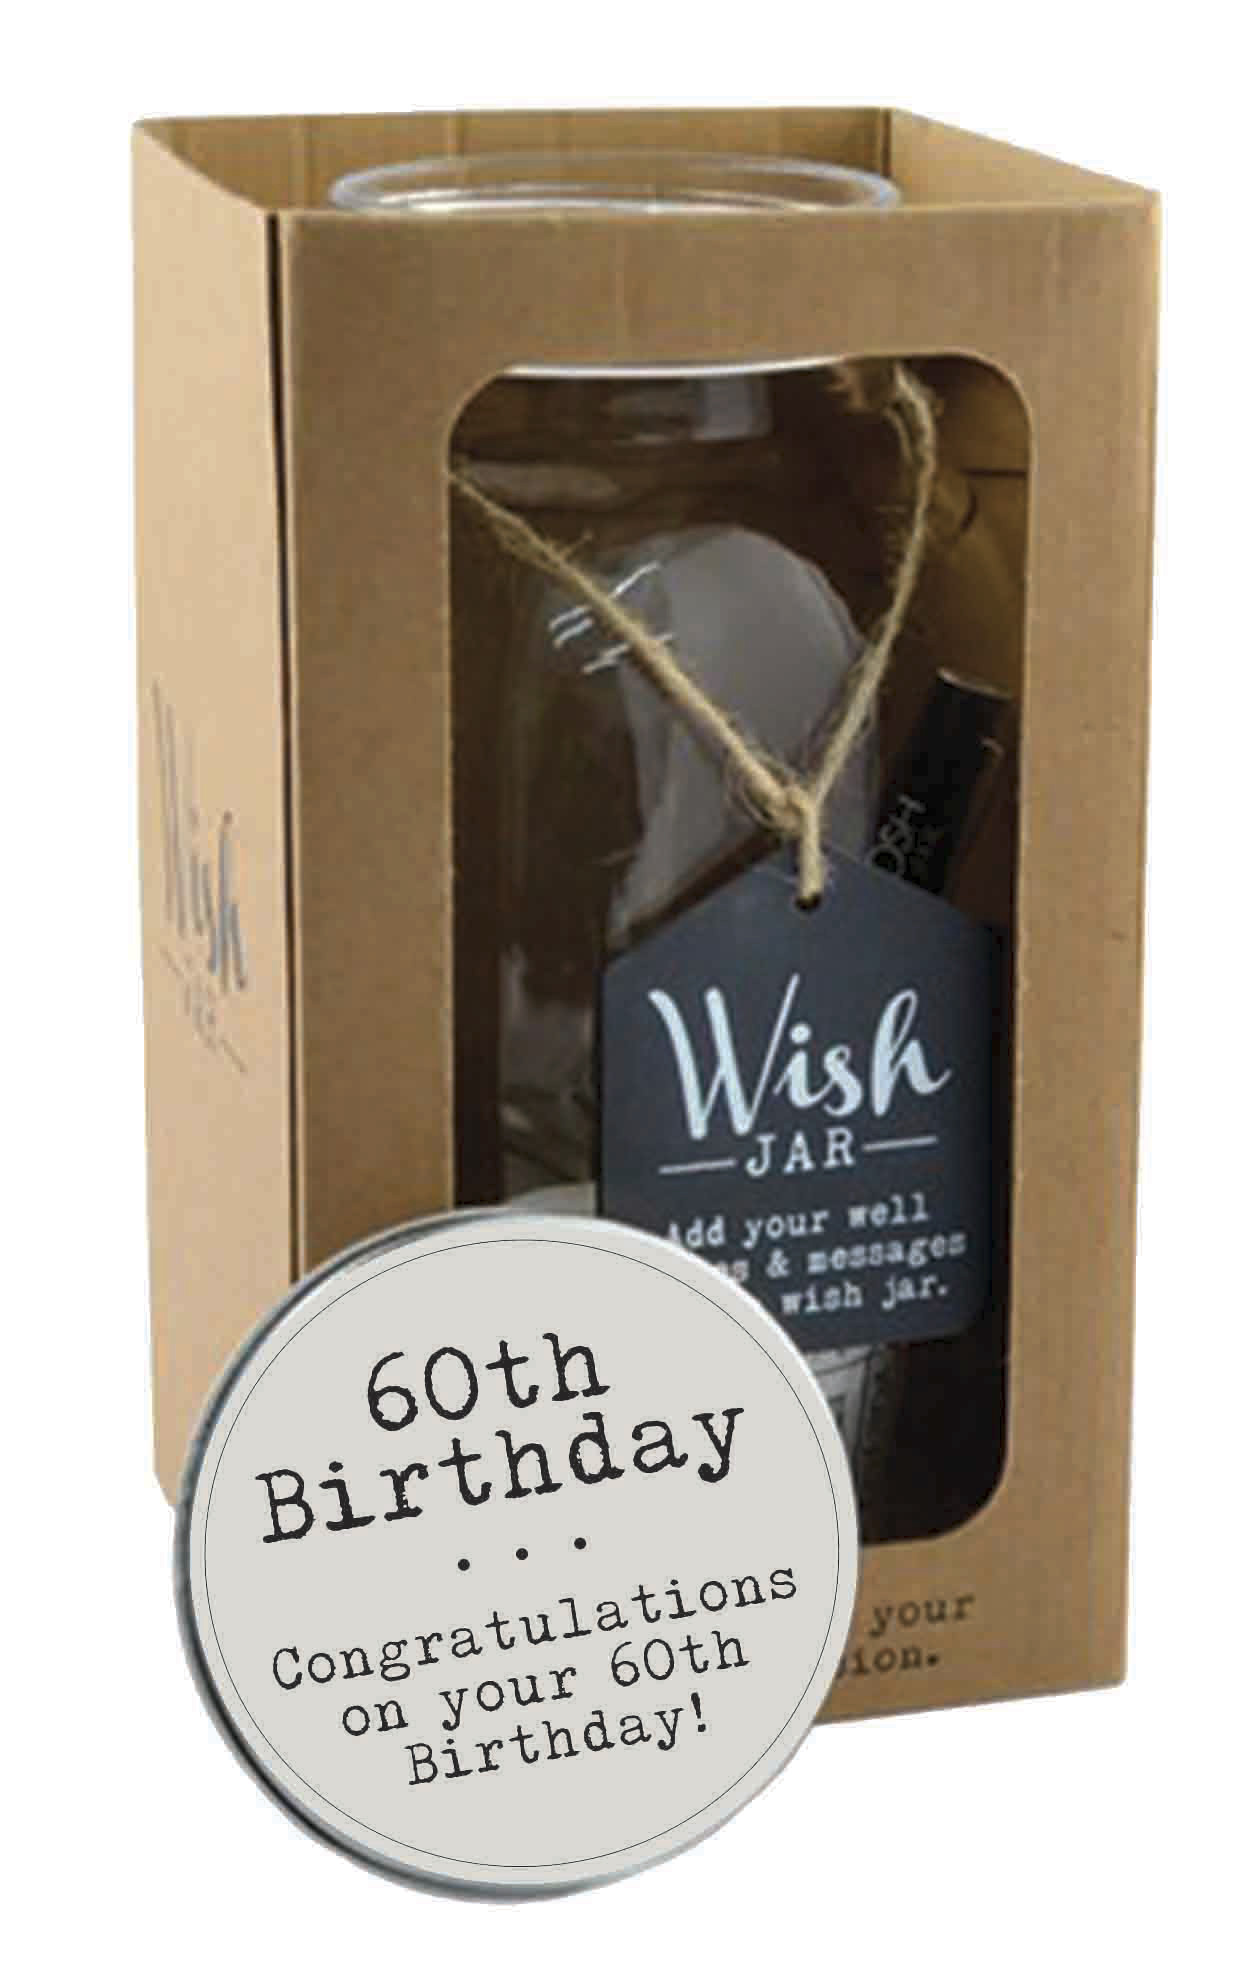 Gift Ideas For Mother'S Birthday
 Splosh 60th Birthday Wish Jar Gift Idea Gifts